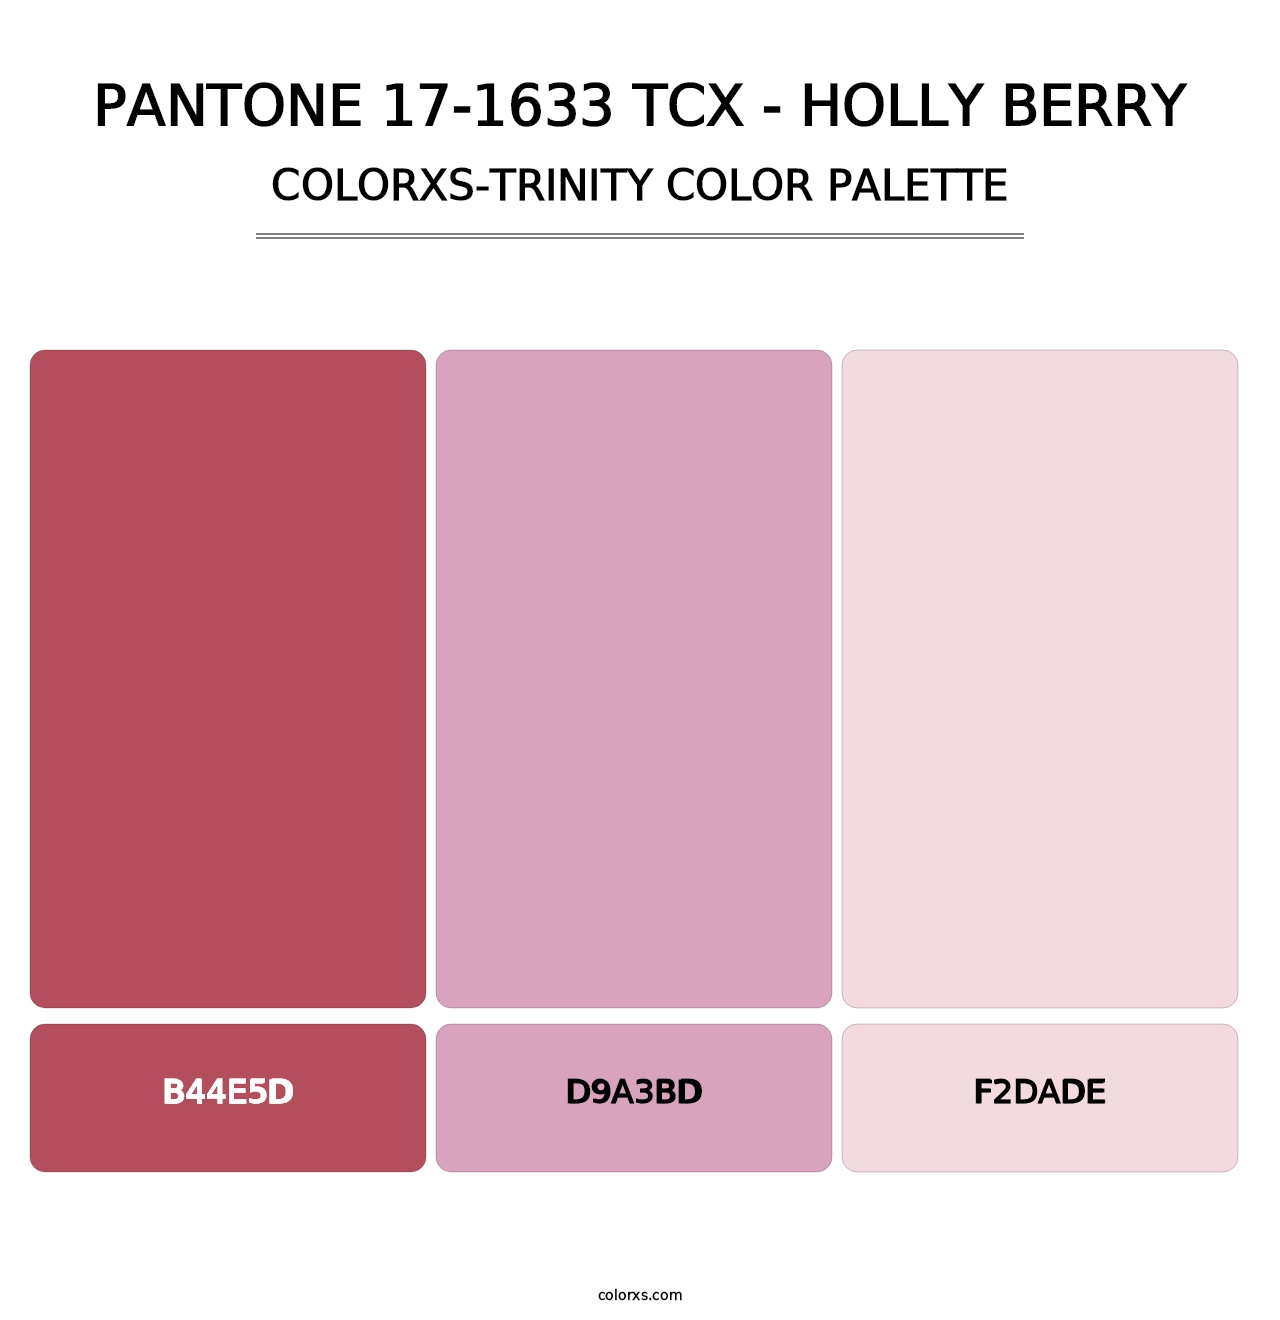 PANTONE 17-1633 TCX - Holly Berry - Colorxs Trinity Palette